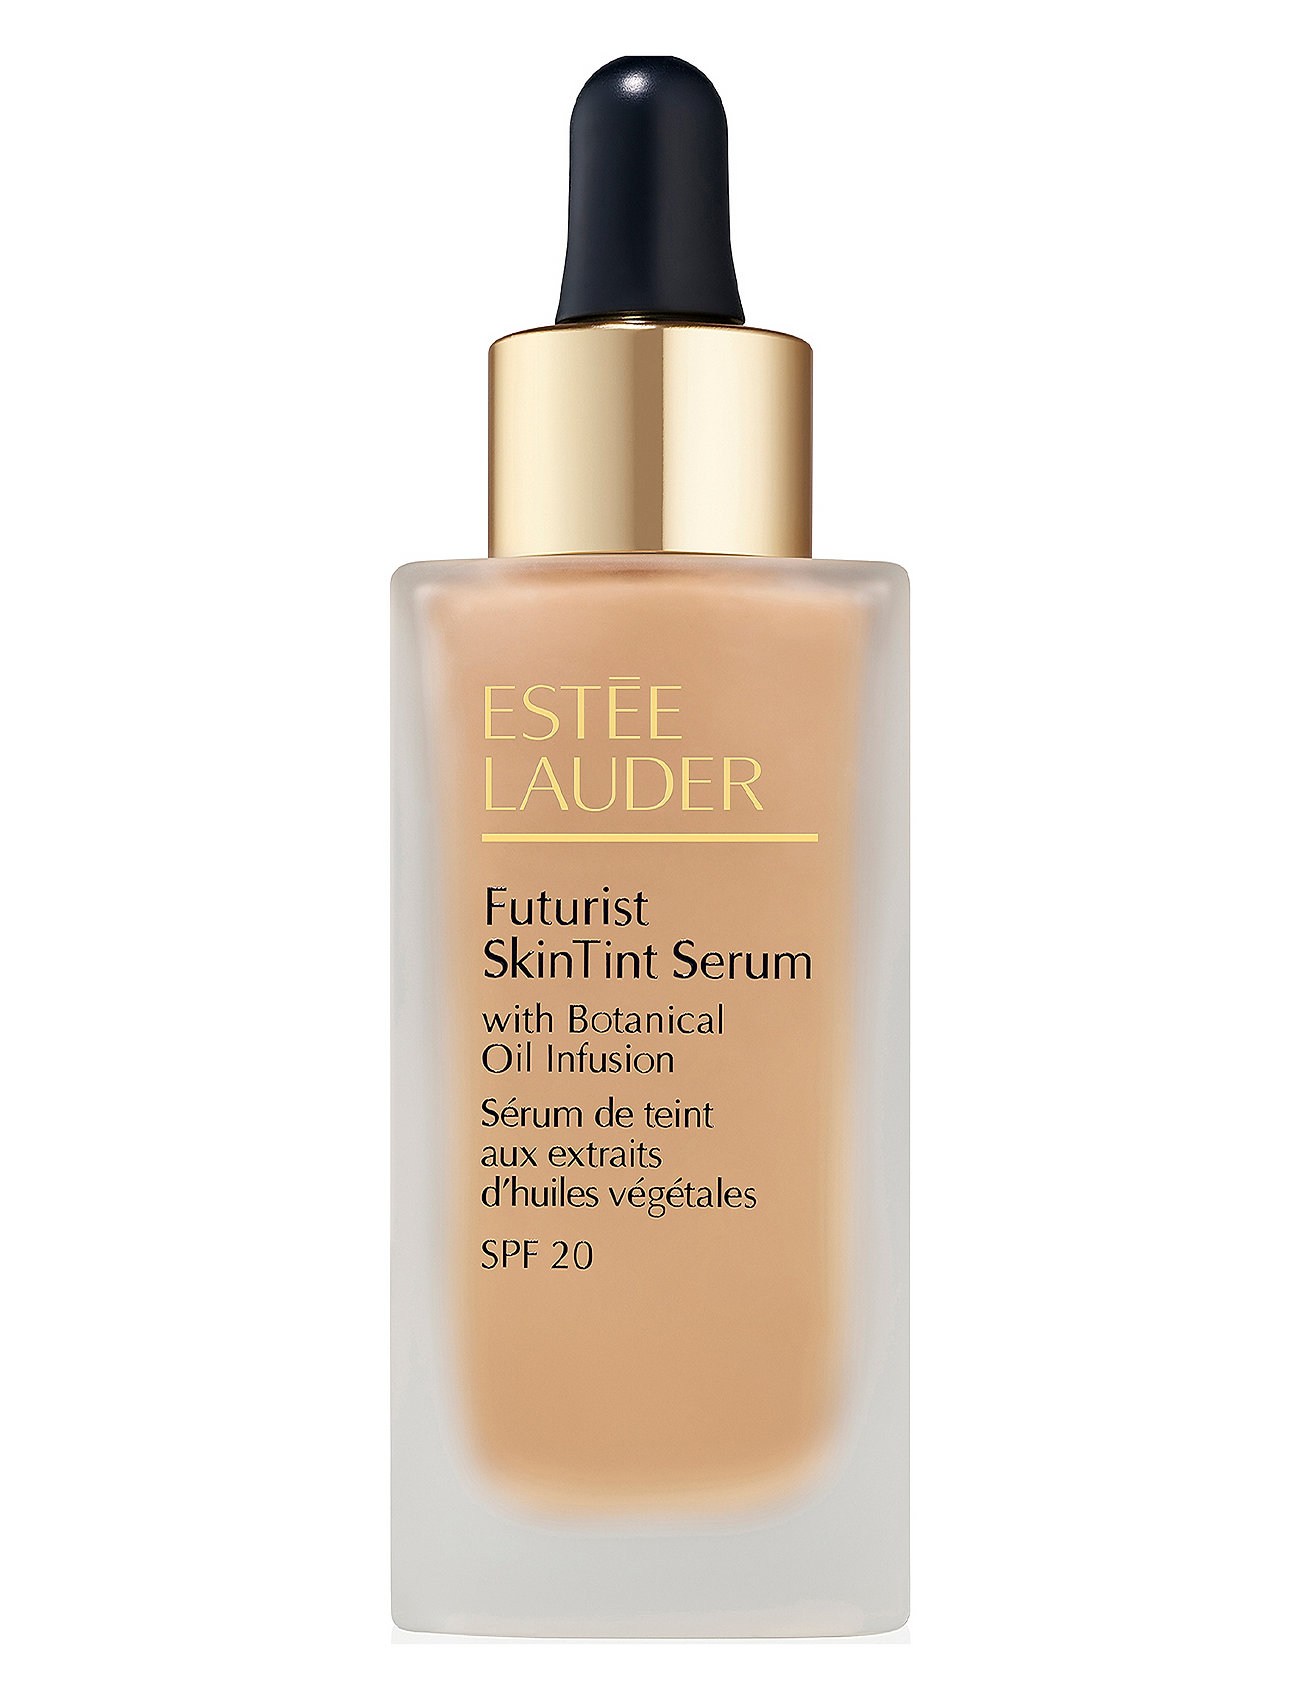 Futurist Skin Tint Serum Foundation Spf20 Foundation Makeup Estée Lauder